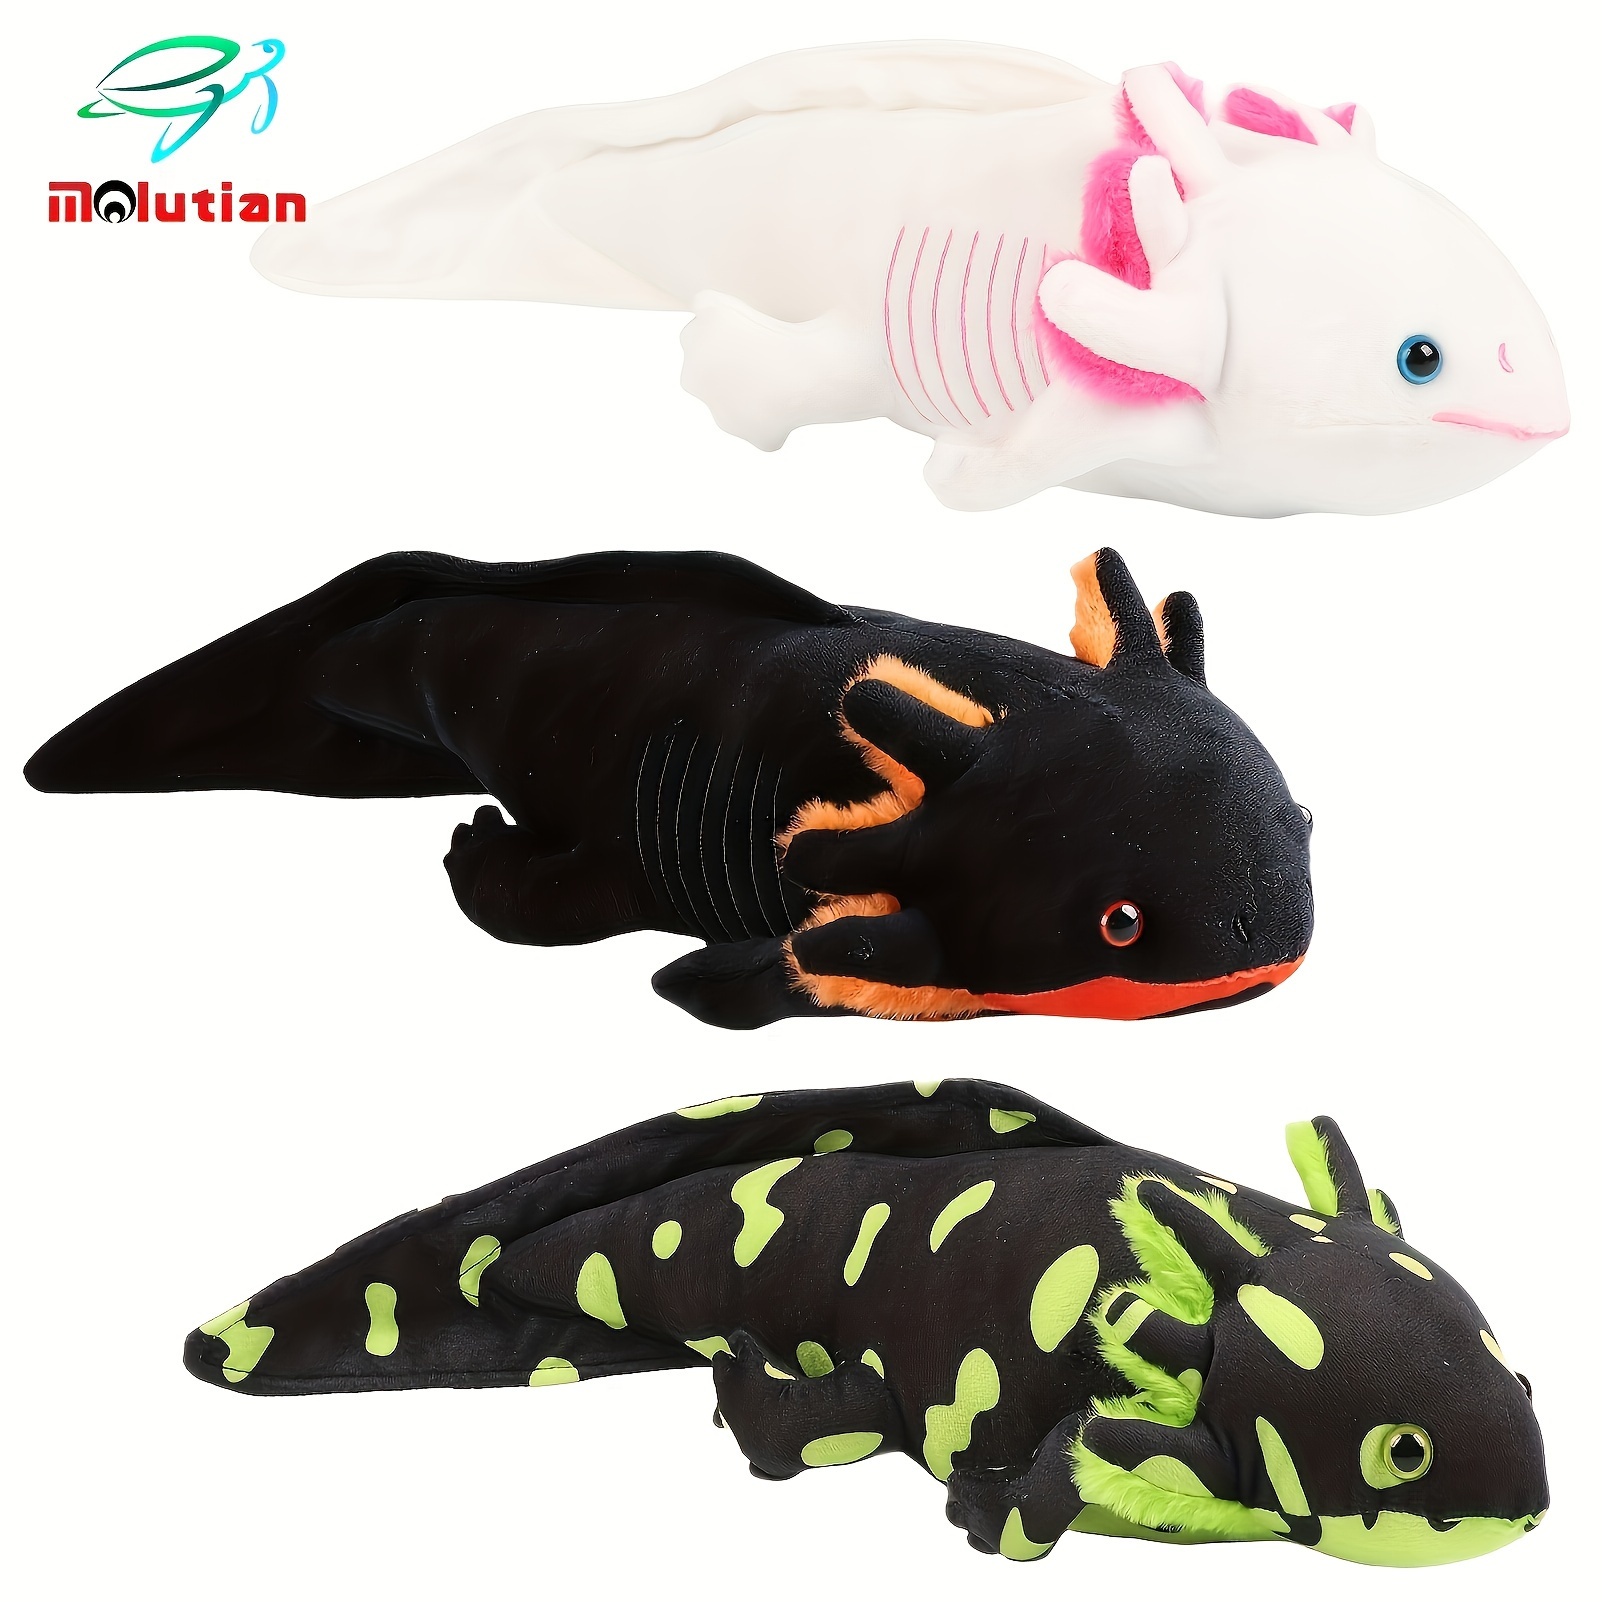 

Molutian 16.53" Halloween Hexagonal Dinosaur & Axolotl Plush - Realistic, Cute & Creepy Amphibian Stuffed Animal For Kids' Home Decor